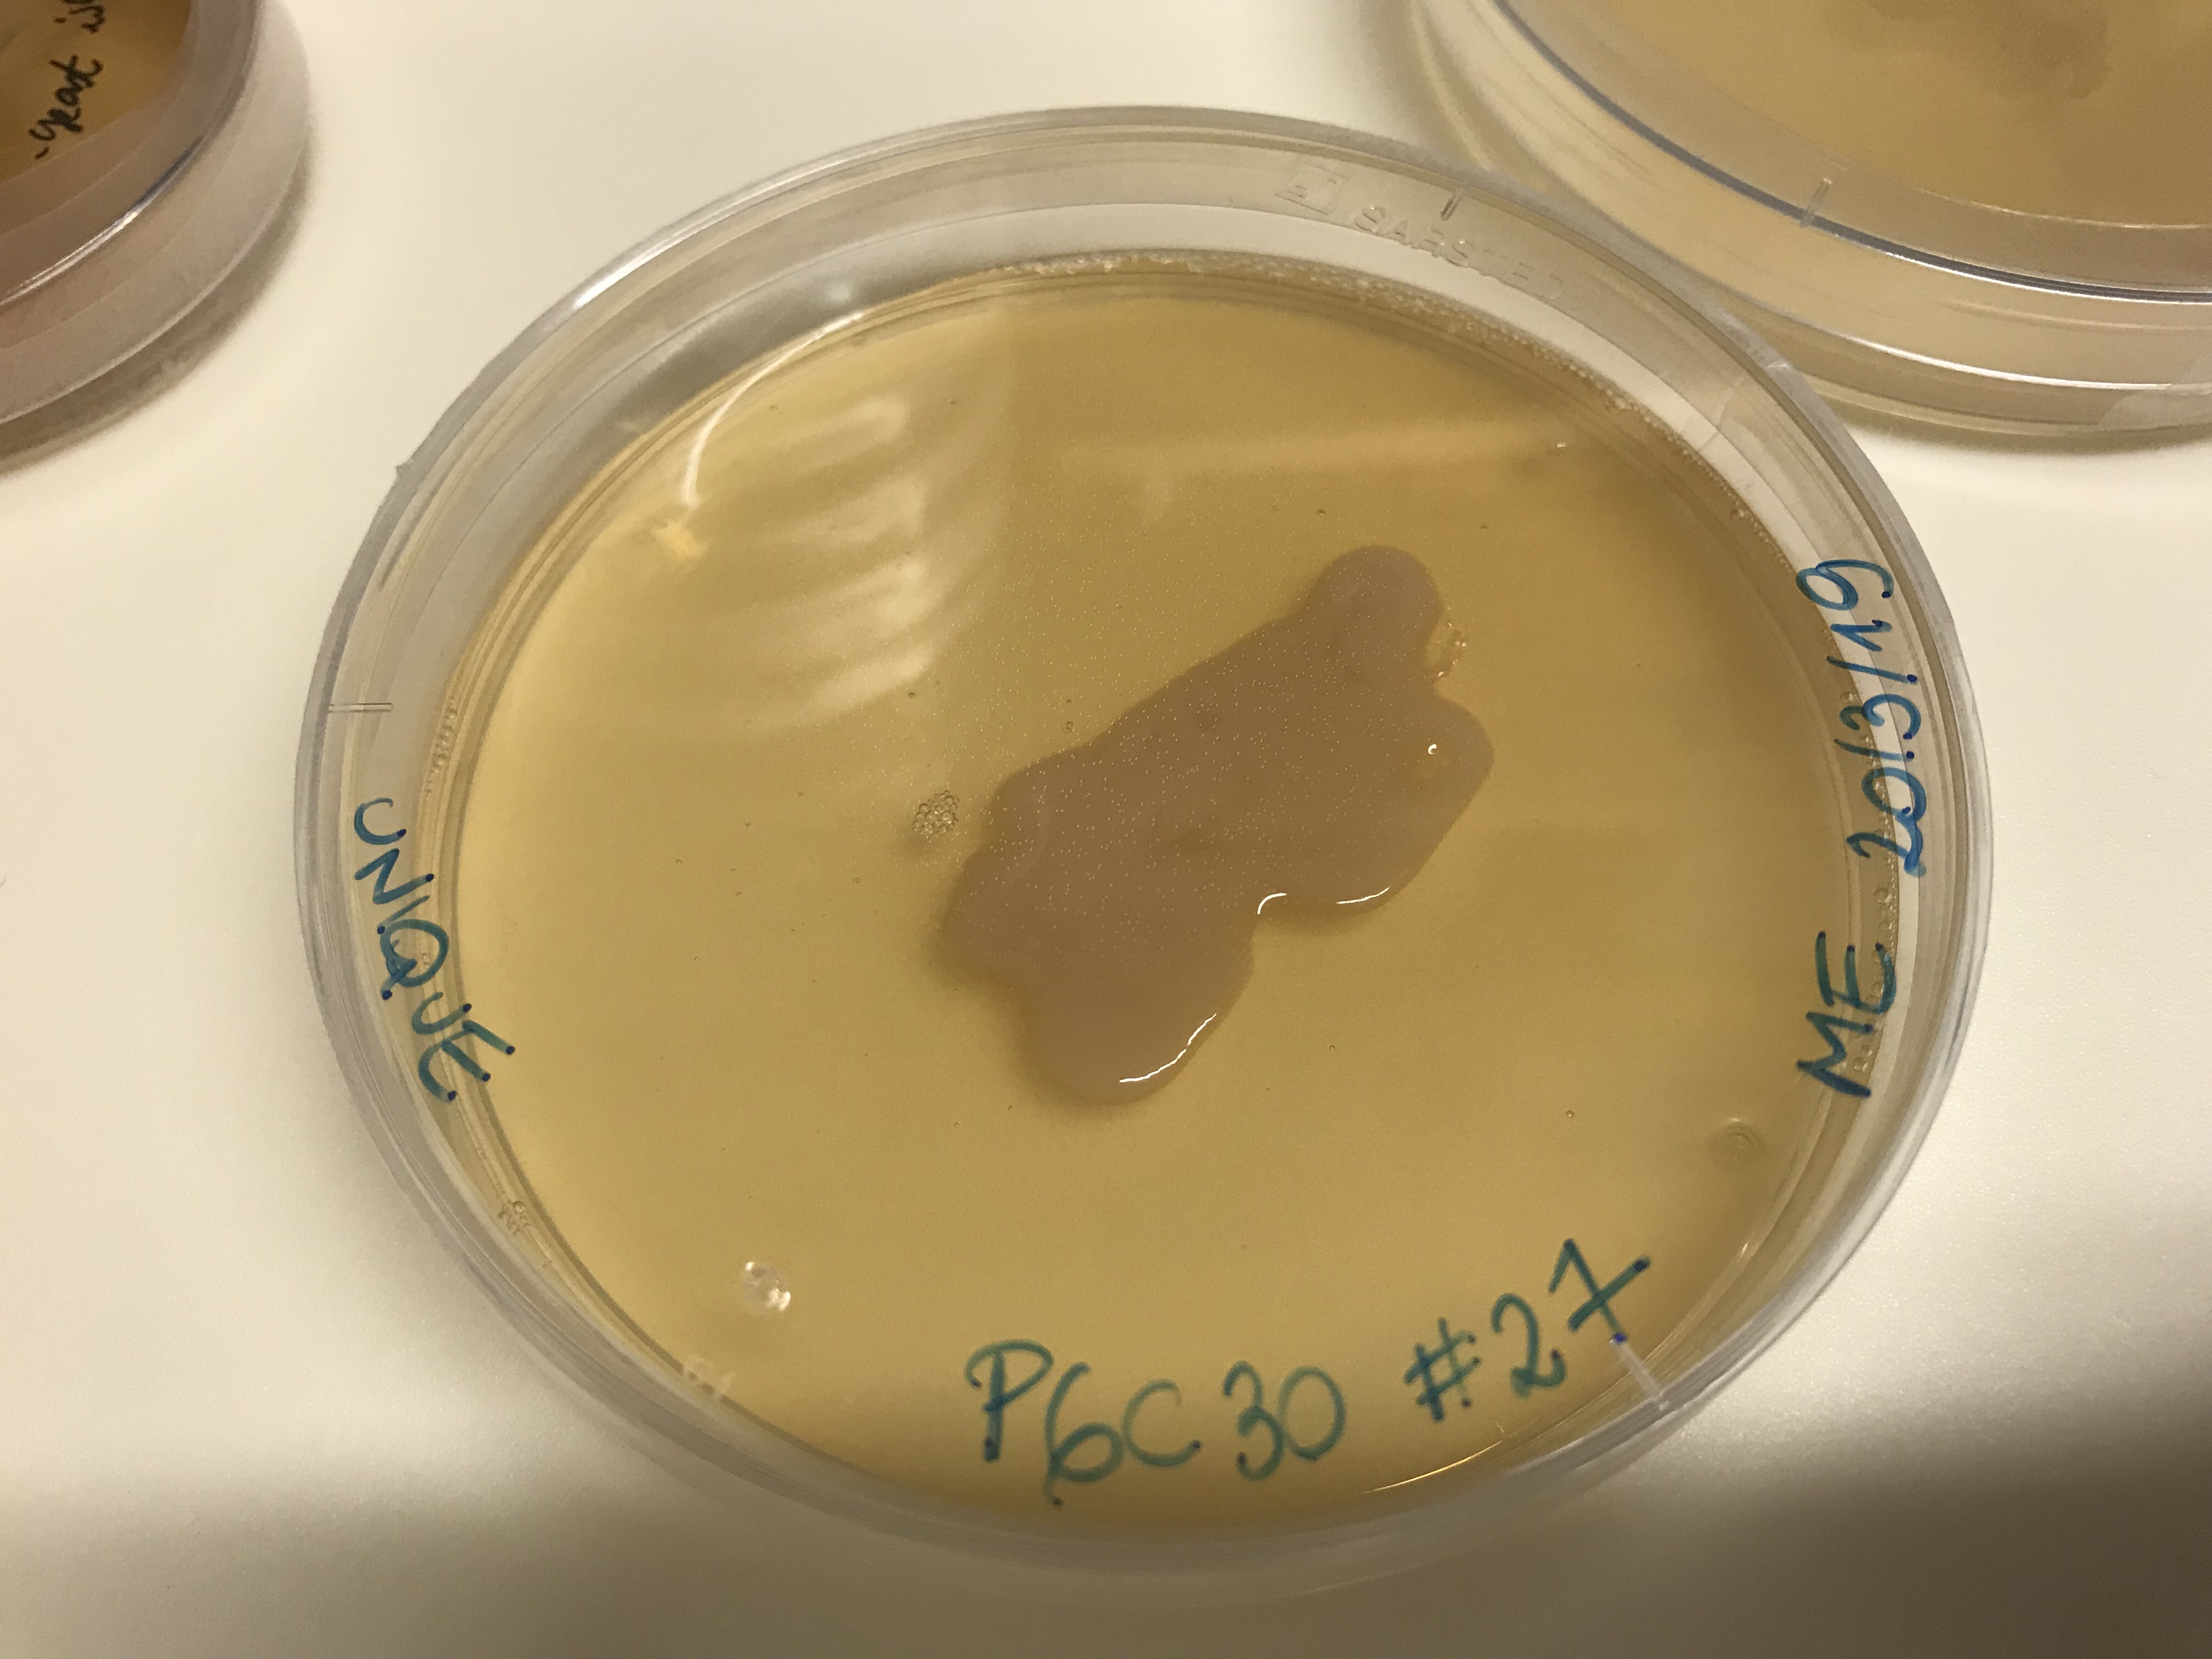 Photo of Microbotryomycetes incertae sedis isolate P6C30 v1.0